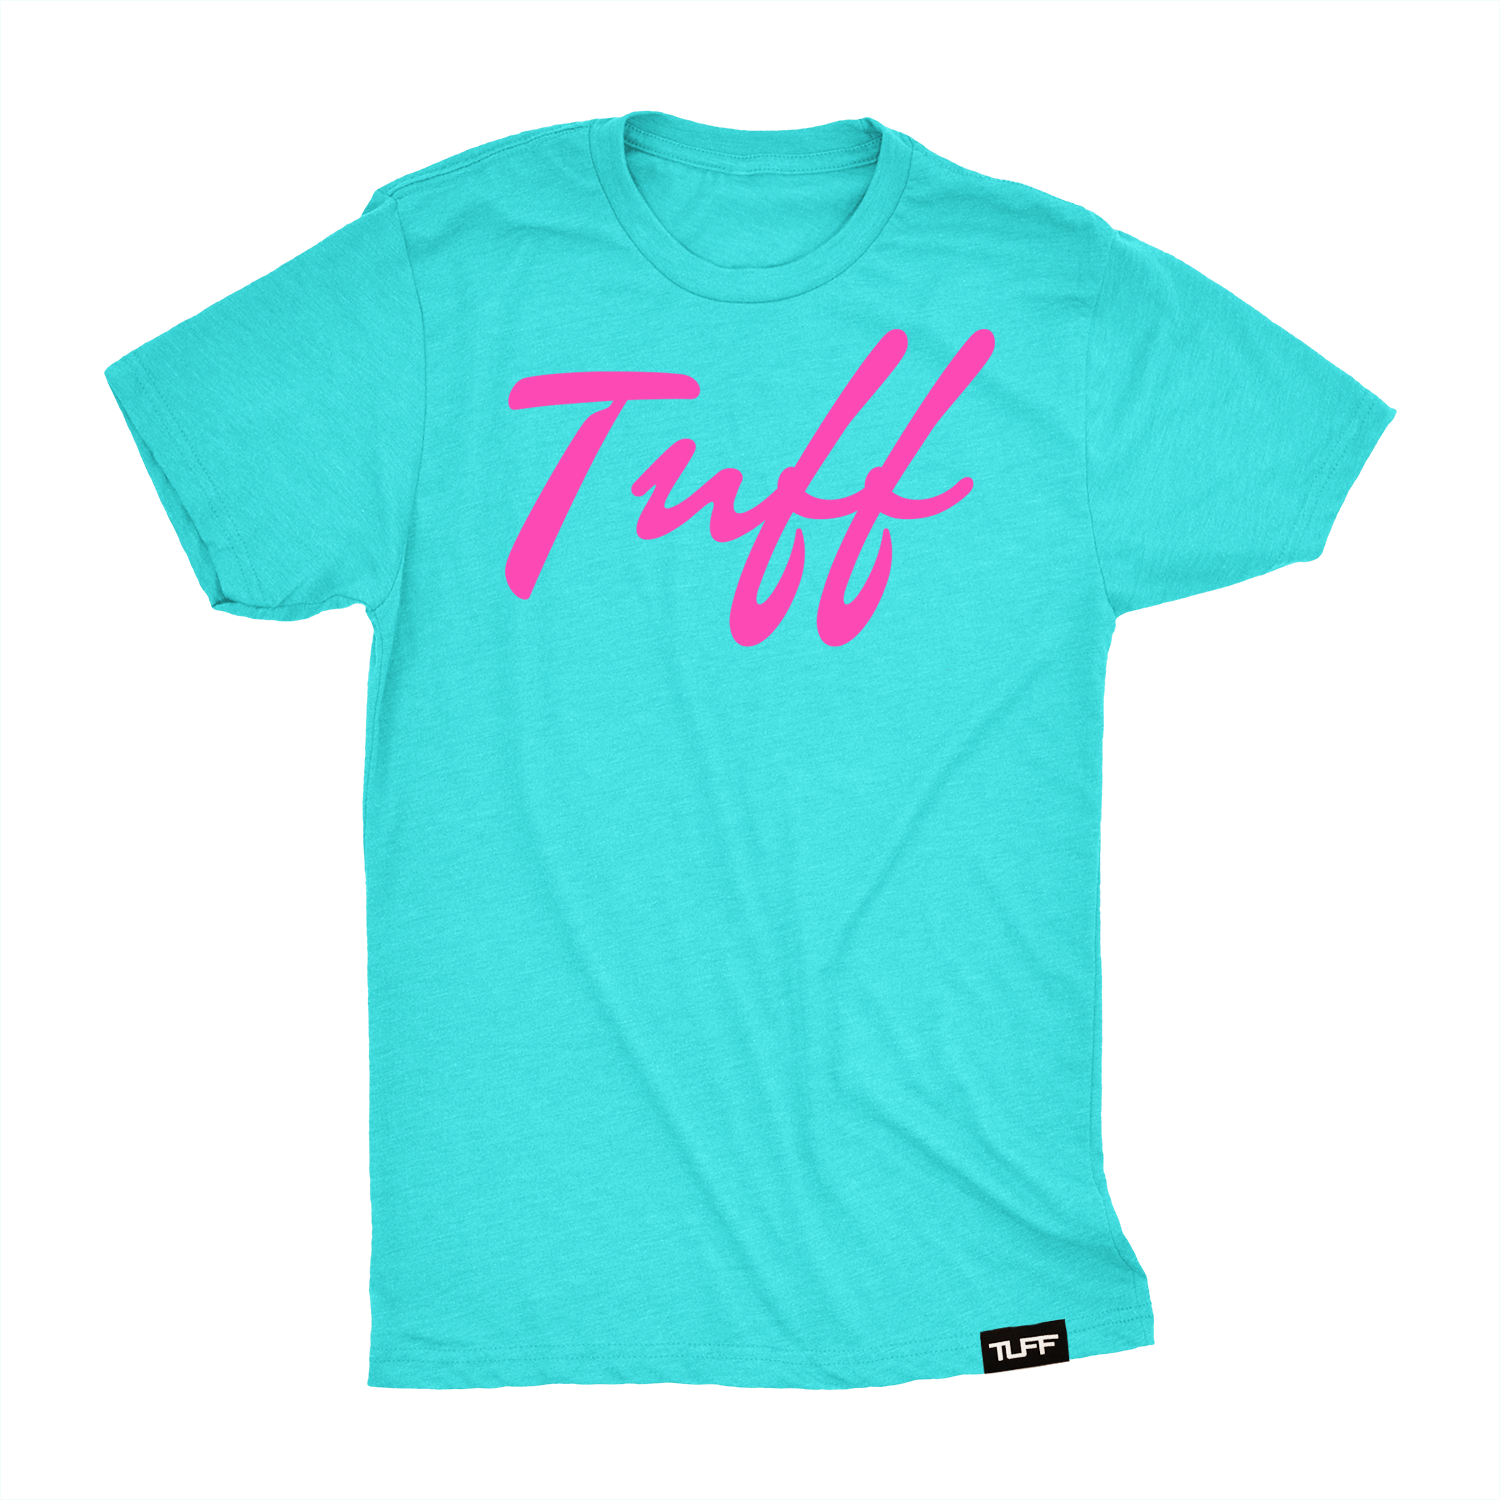 TUFF Thin Script Teal Tee - Limited Edition S / Neon Pink Logo TuffWraps.com